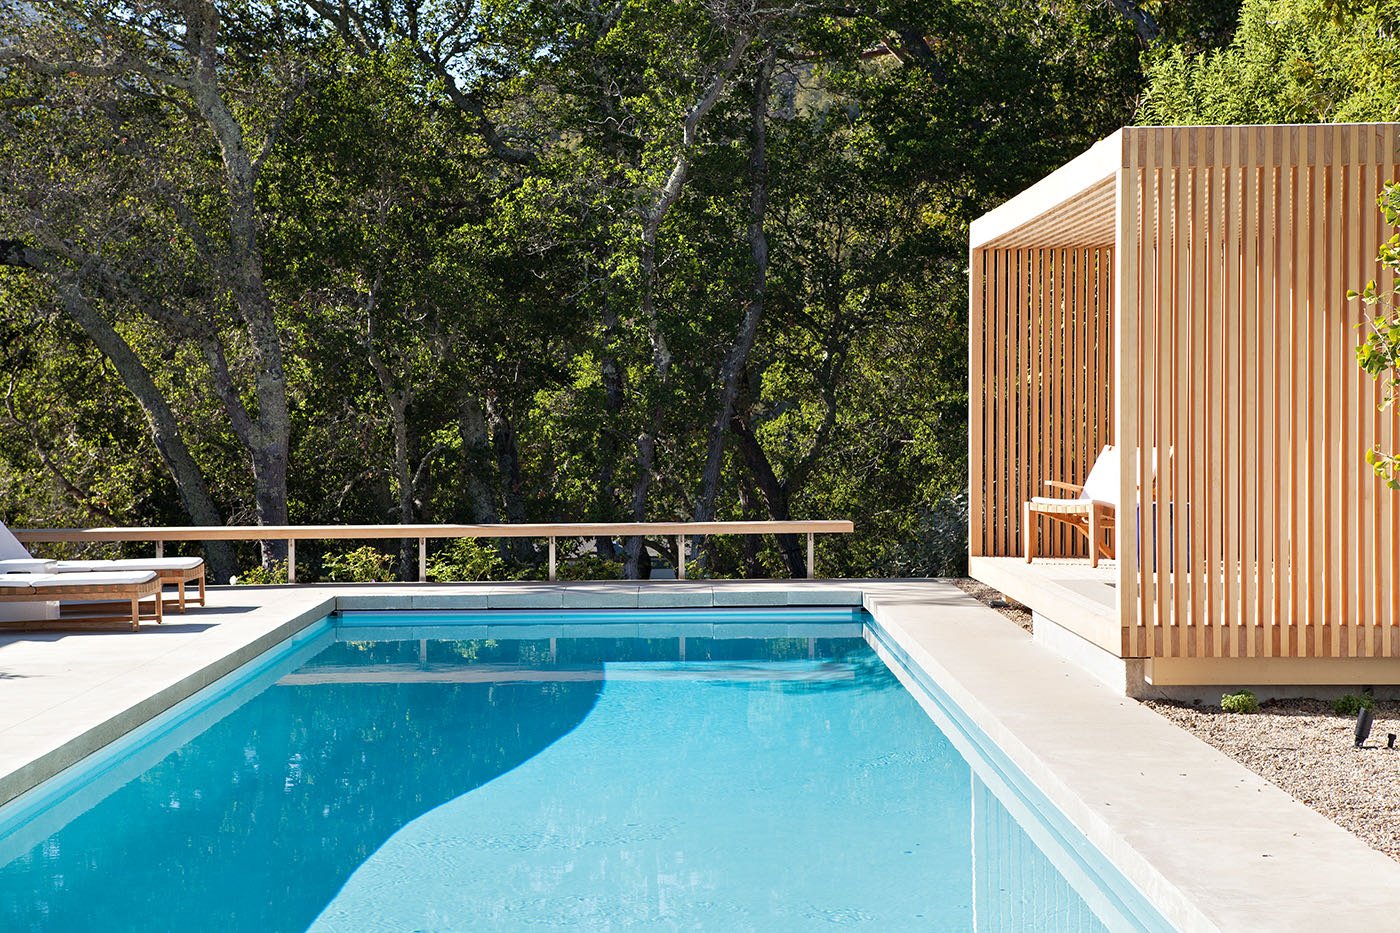 turner residence - jensen architects - pool